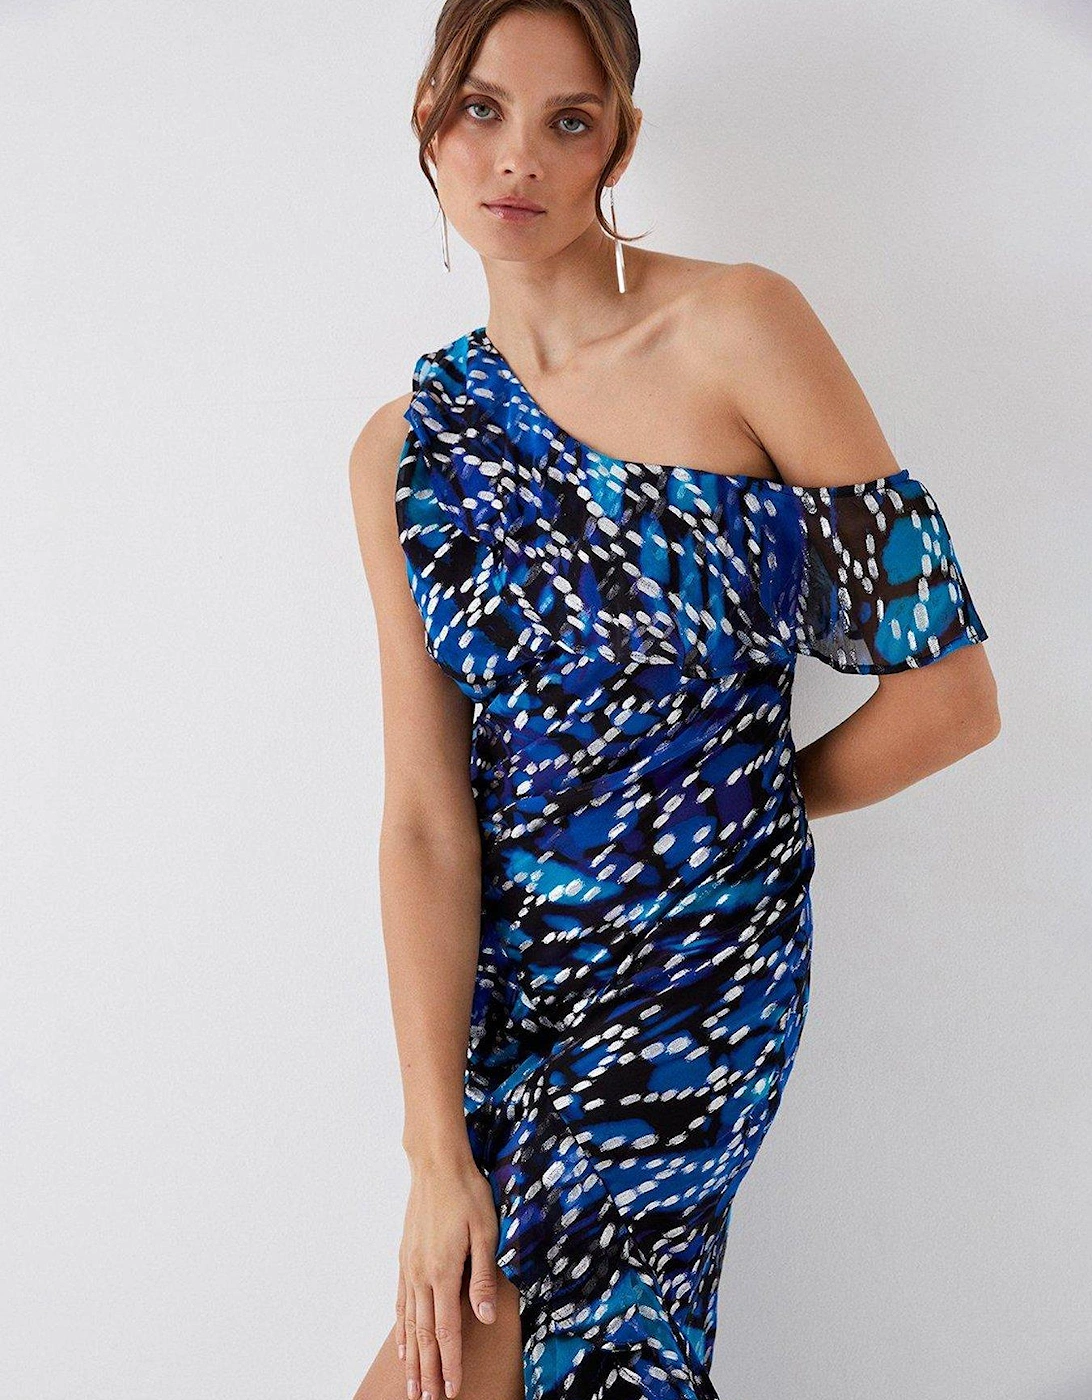 Julie Kuyath One Shoulder Metallic Maxi Dress - Blue